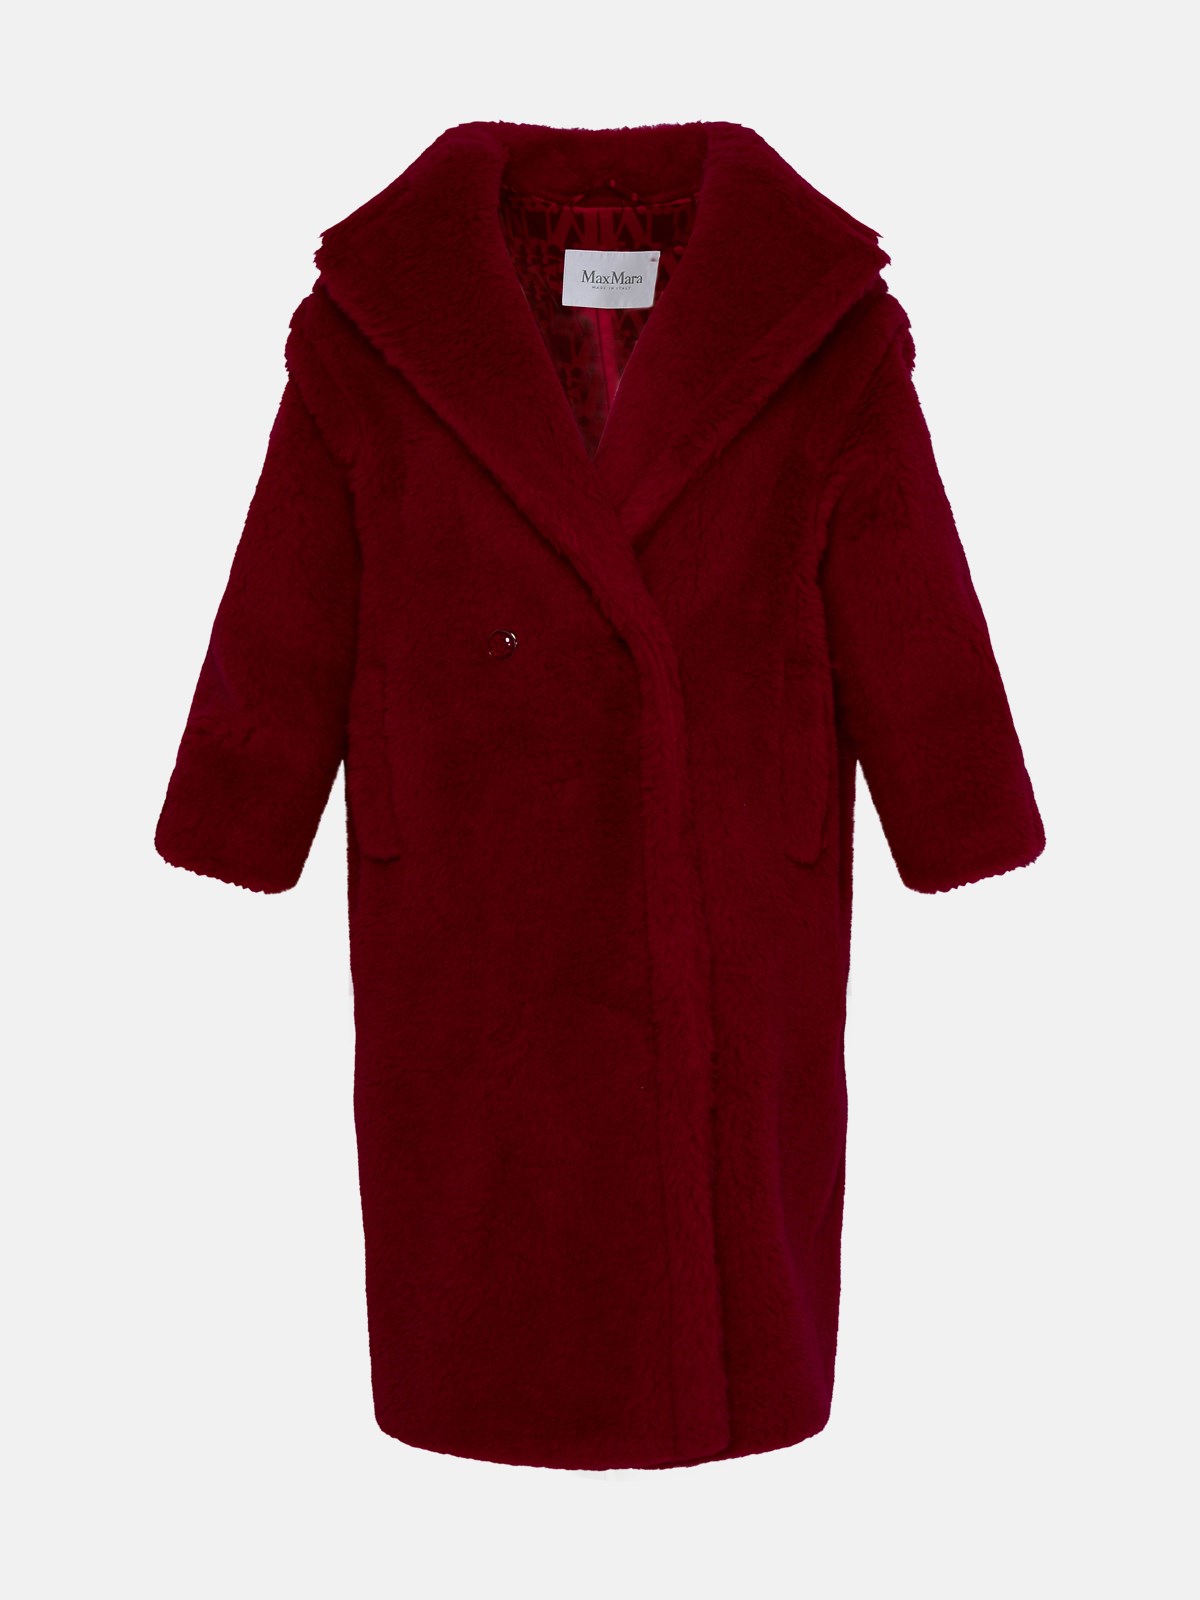 Max Mara Red Wool Blend Teddy Coat